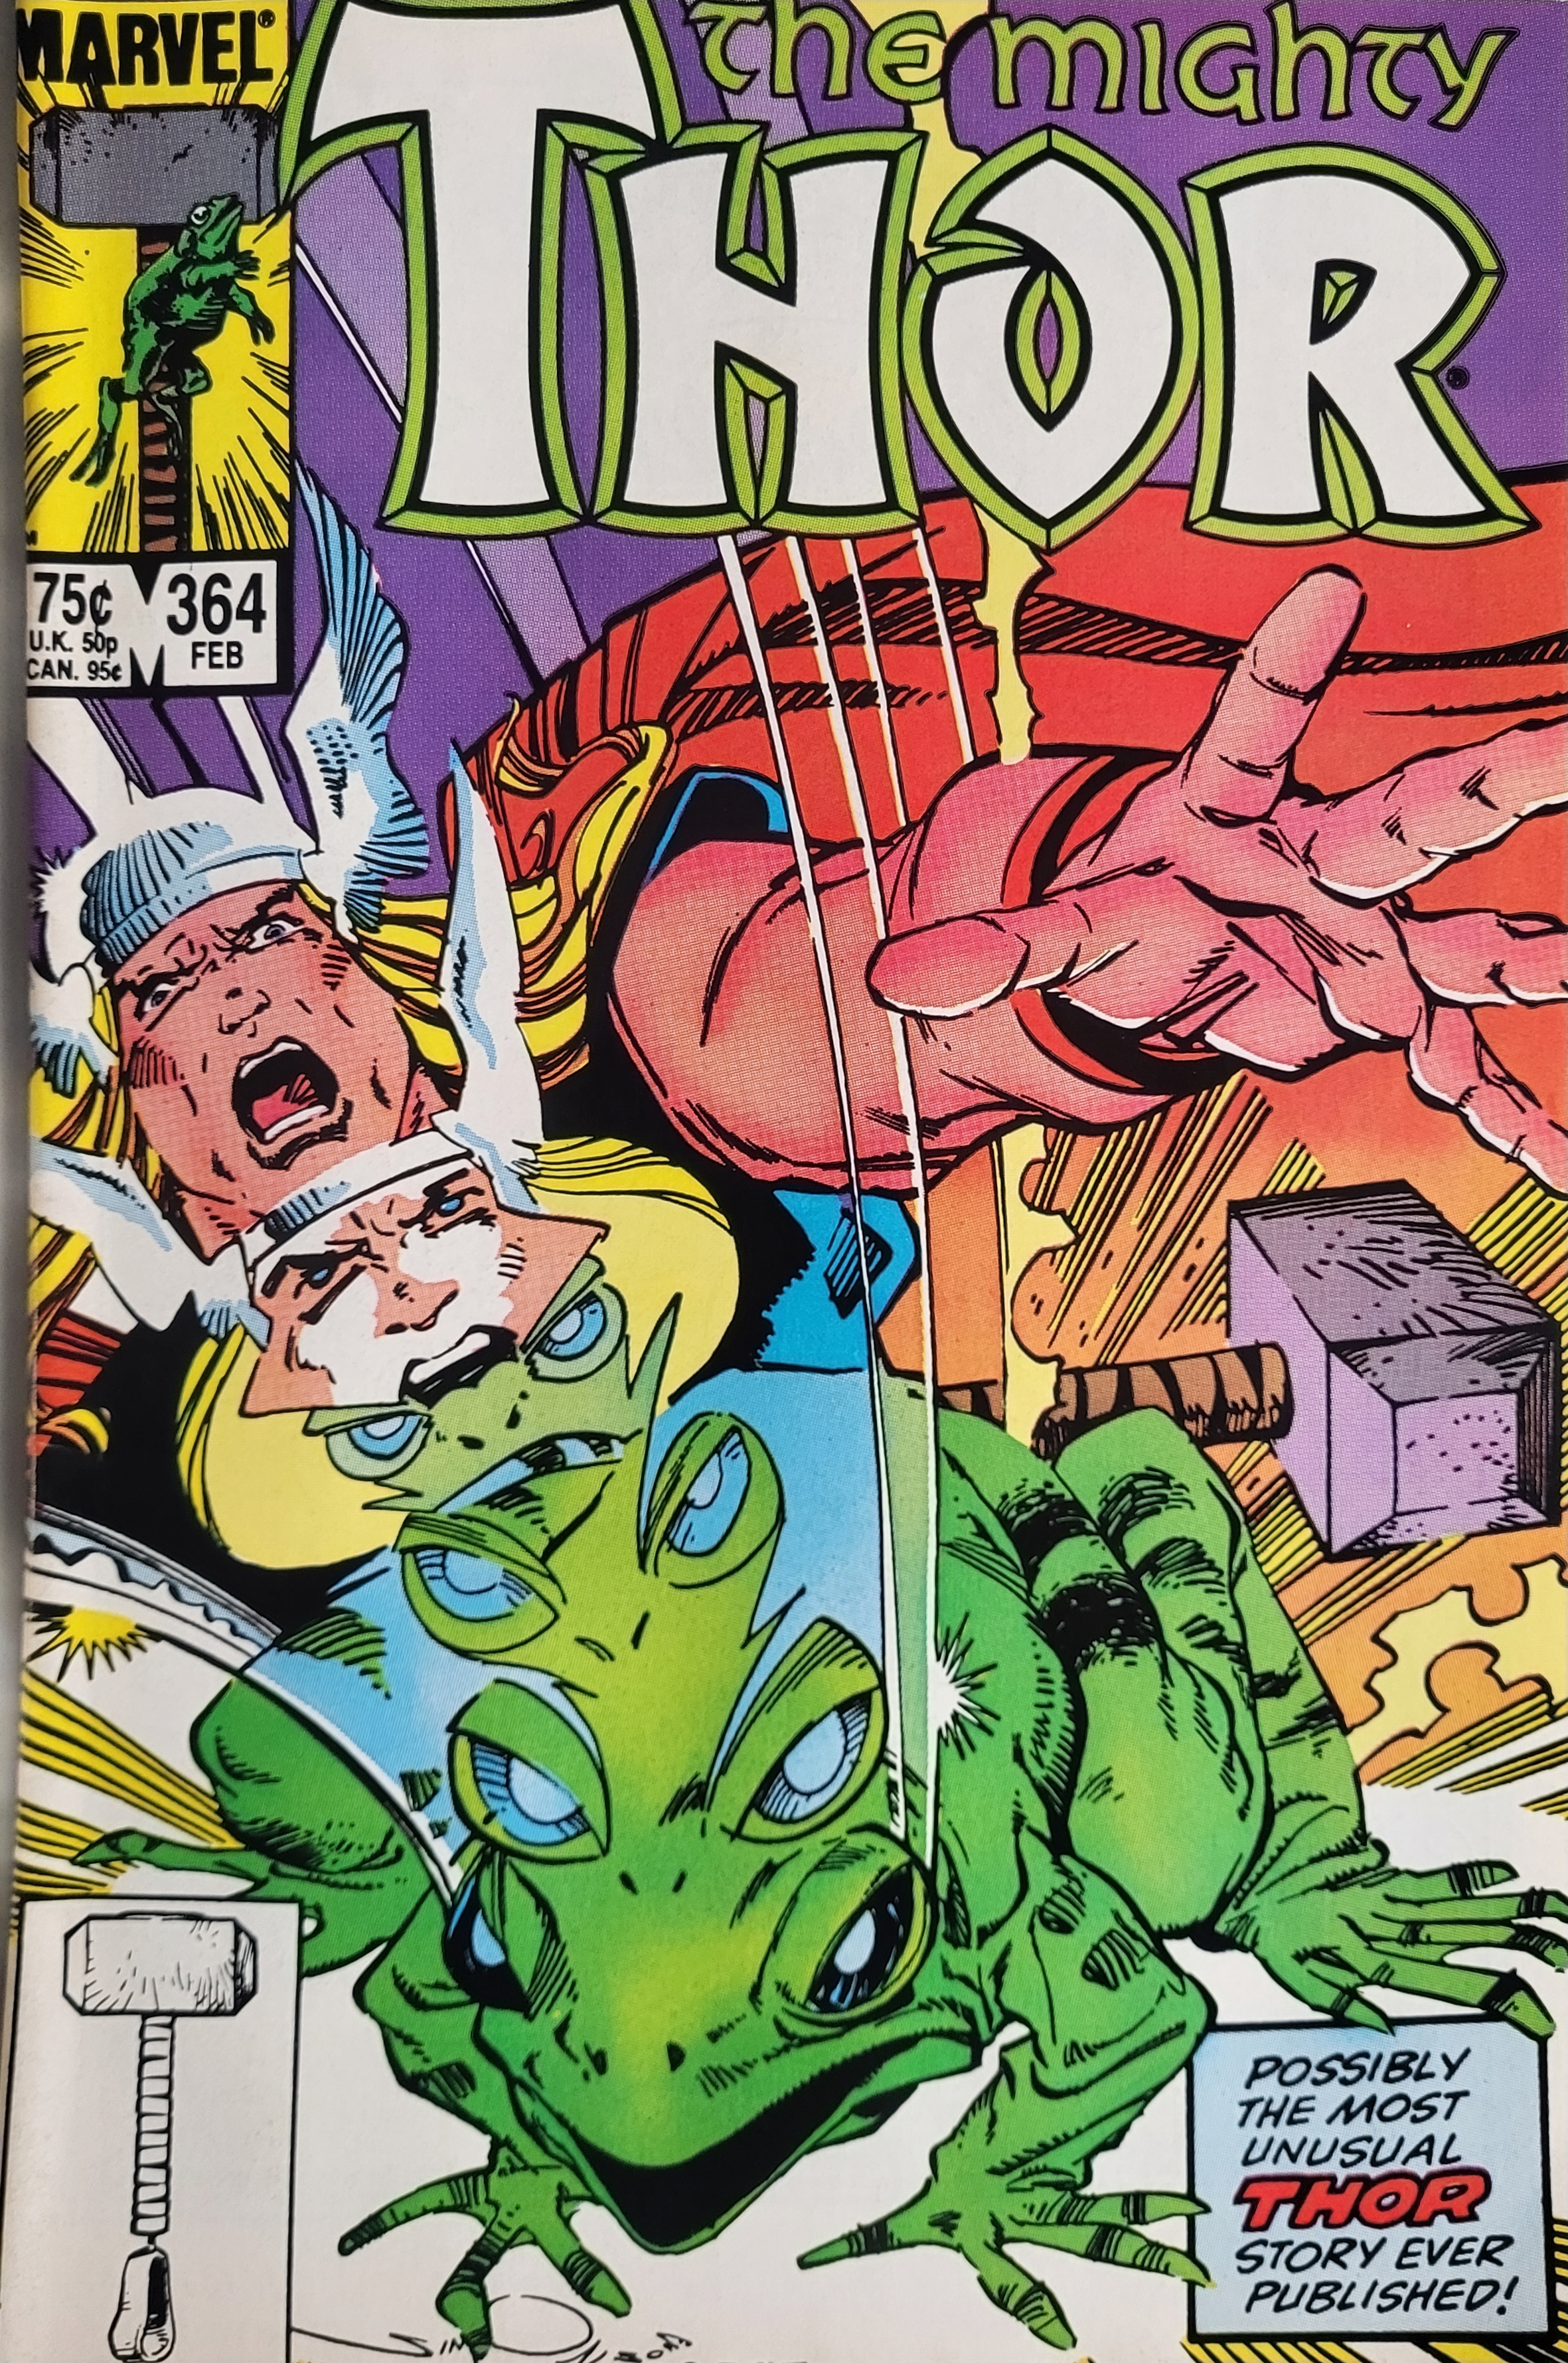 Thor #364